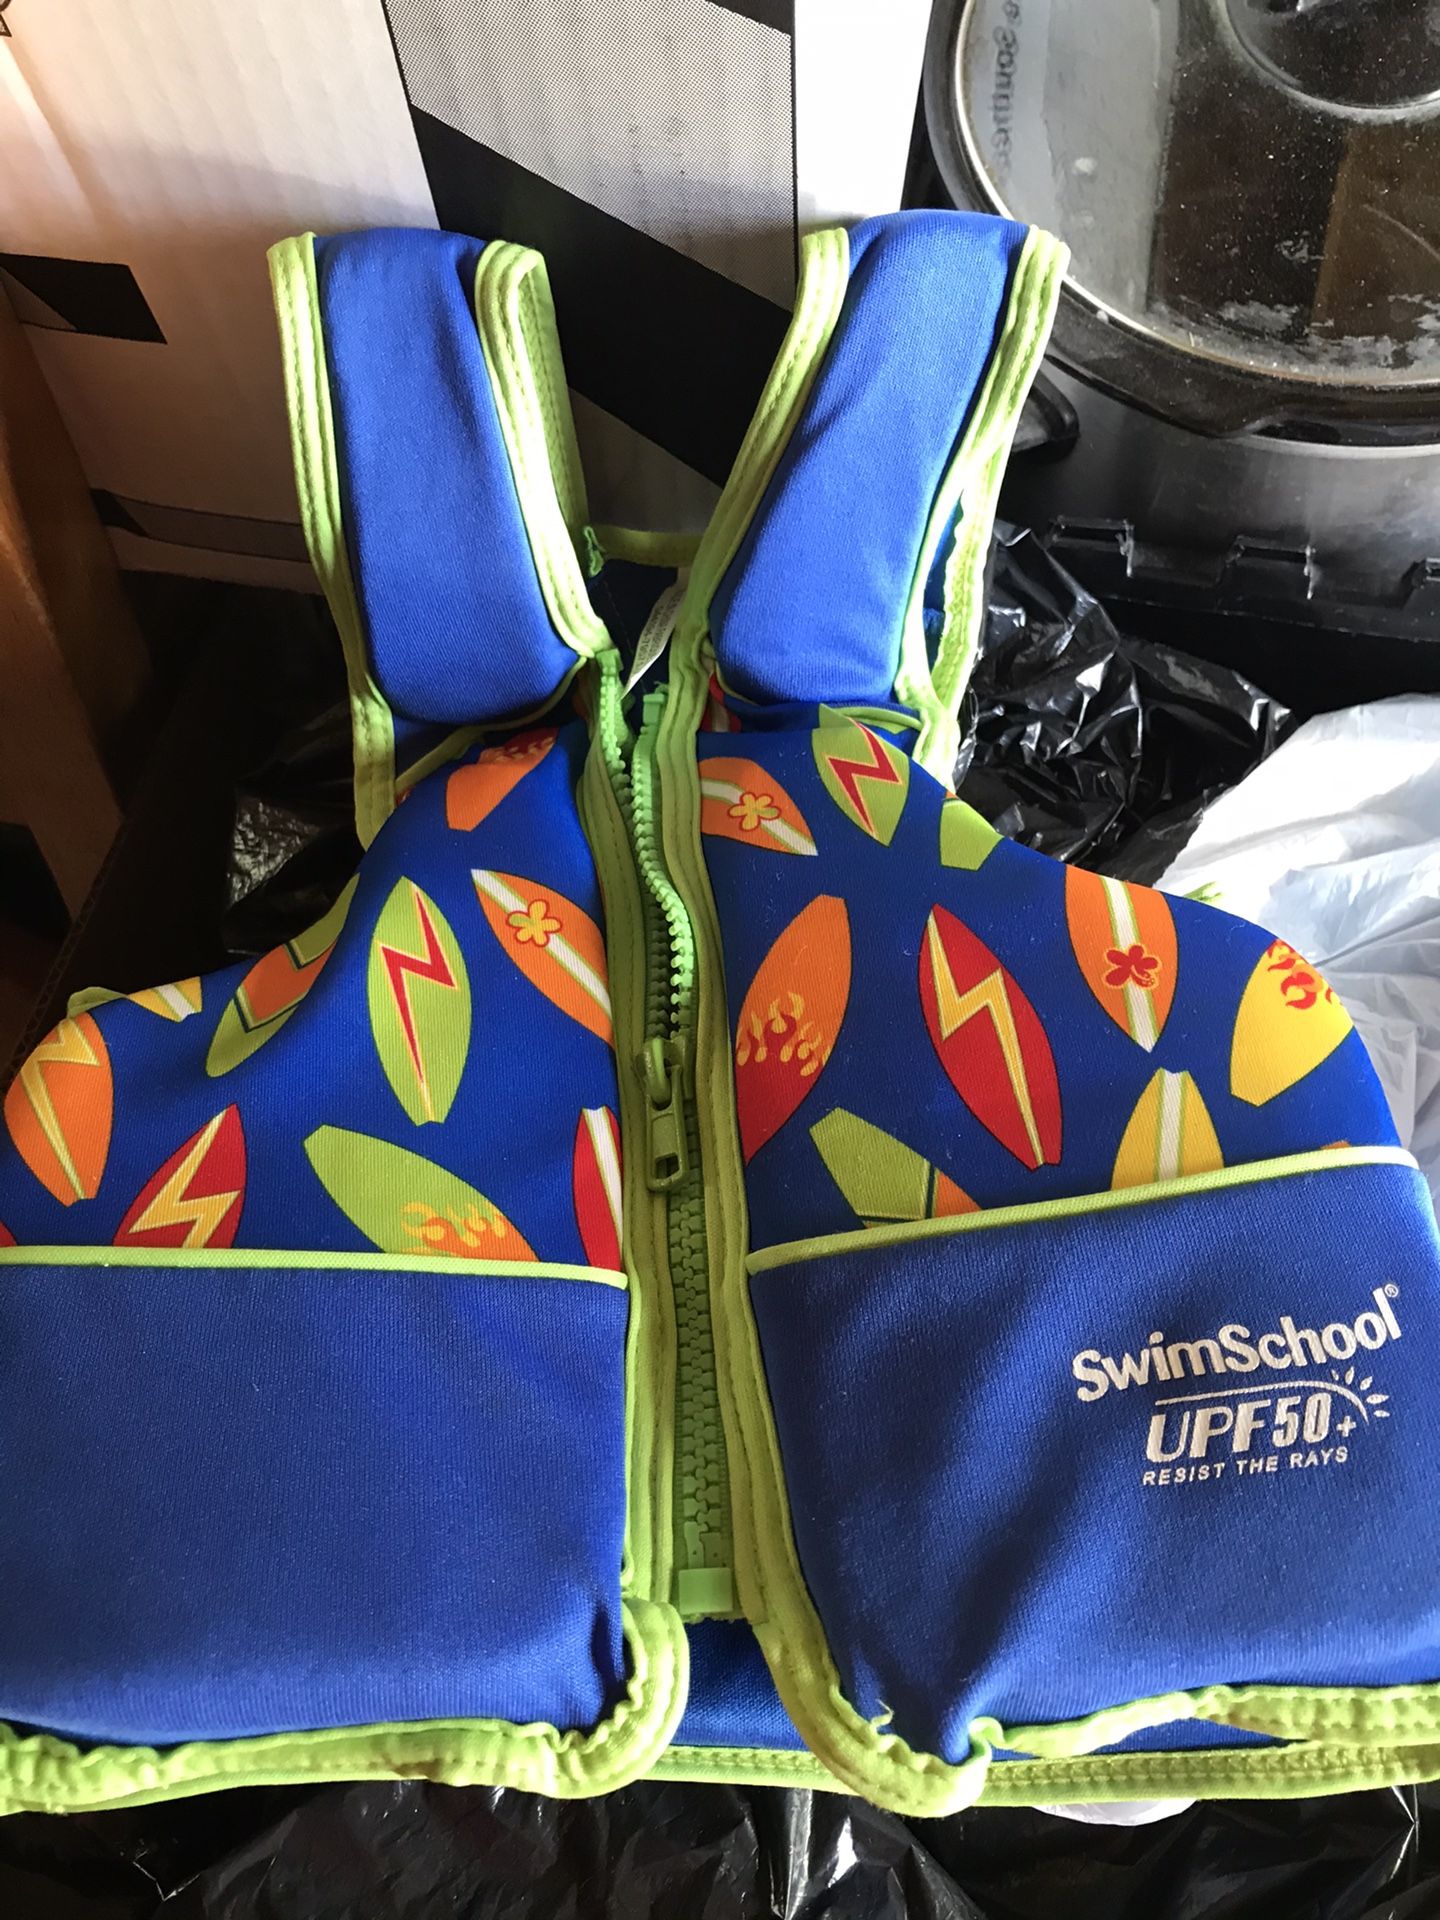 Swimmers Life vest